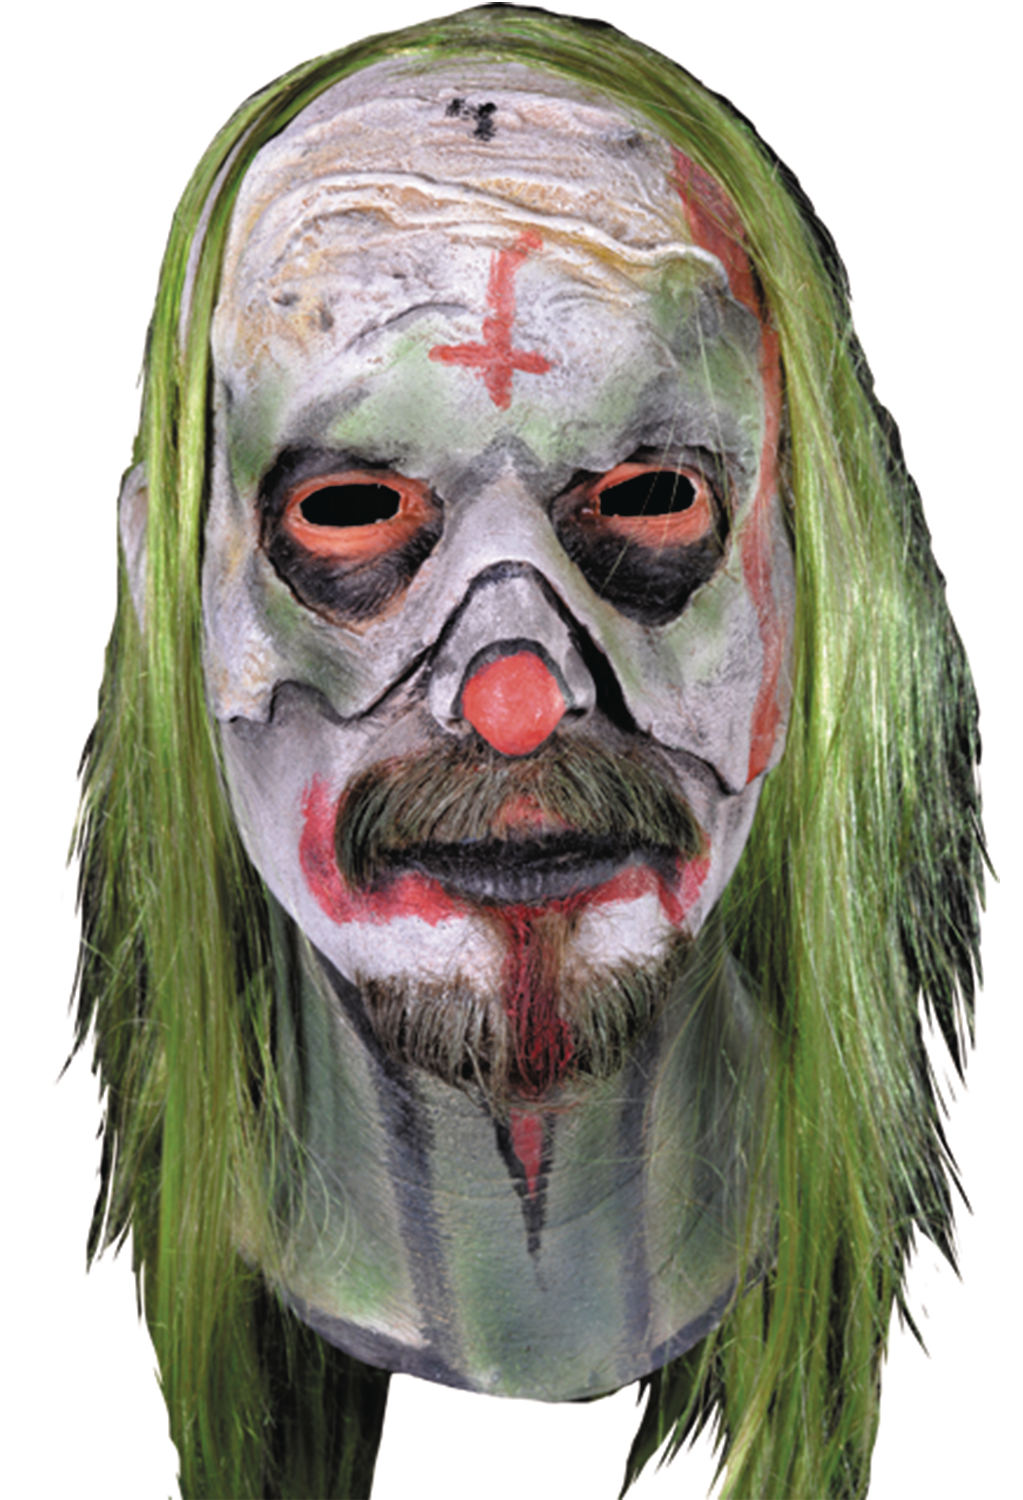 31: Psycho Head (Mask) [SALE] 